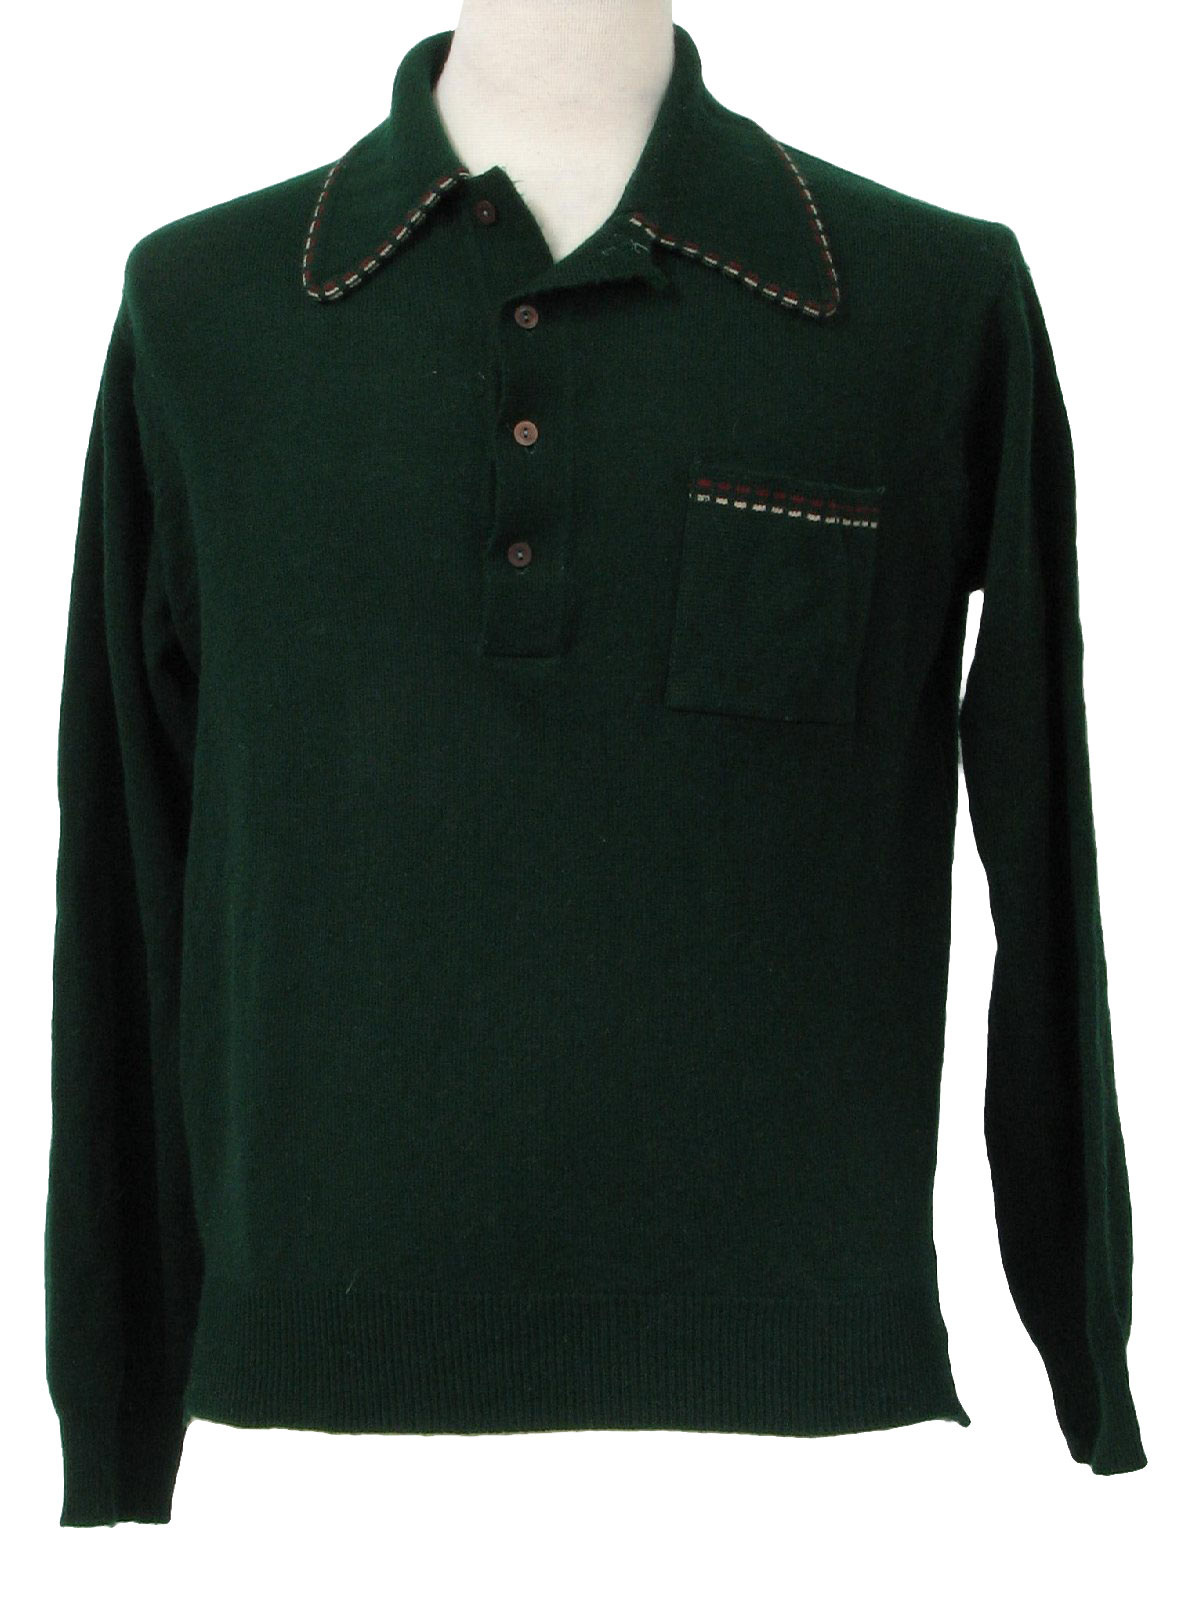 Seventies Vintage Knit Shirt: 70s -Bradlees- Mens forrest green, rust